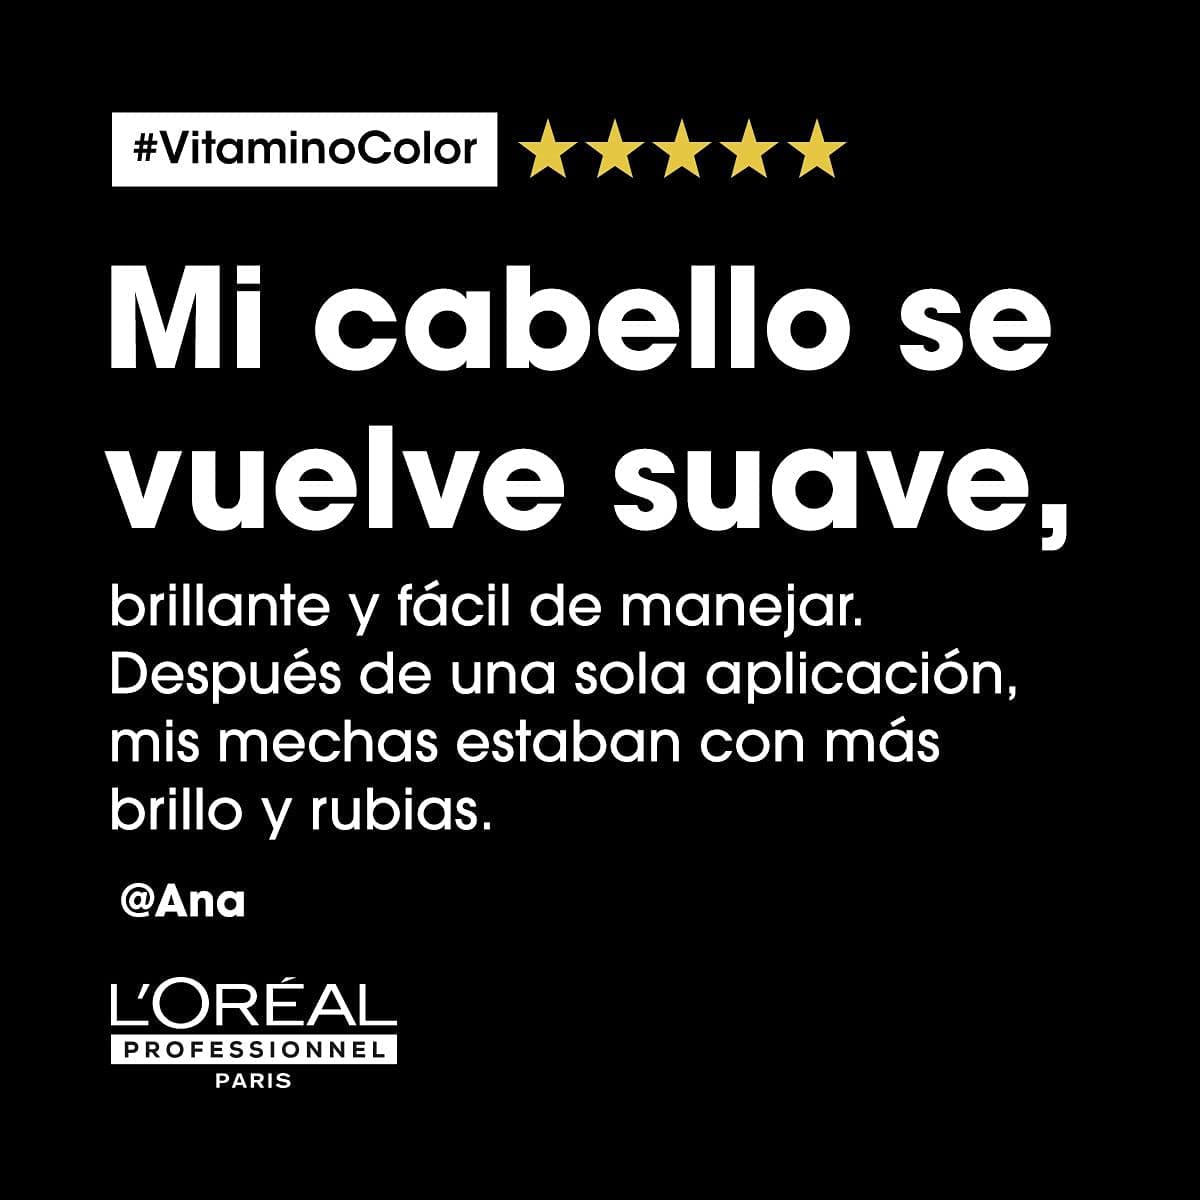 L'Oréal Professionnel Hair Care Tratamiento Vitamino Color 10 en 1 190 ml Roberta Beauty Club